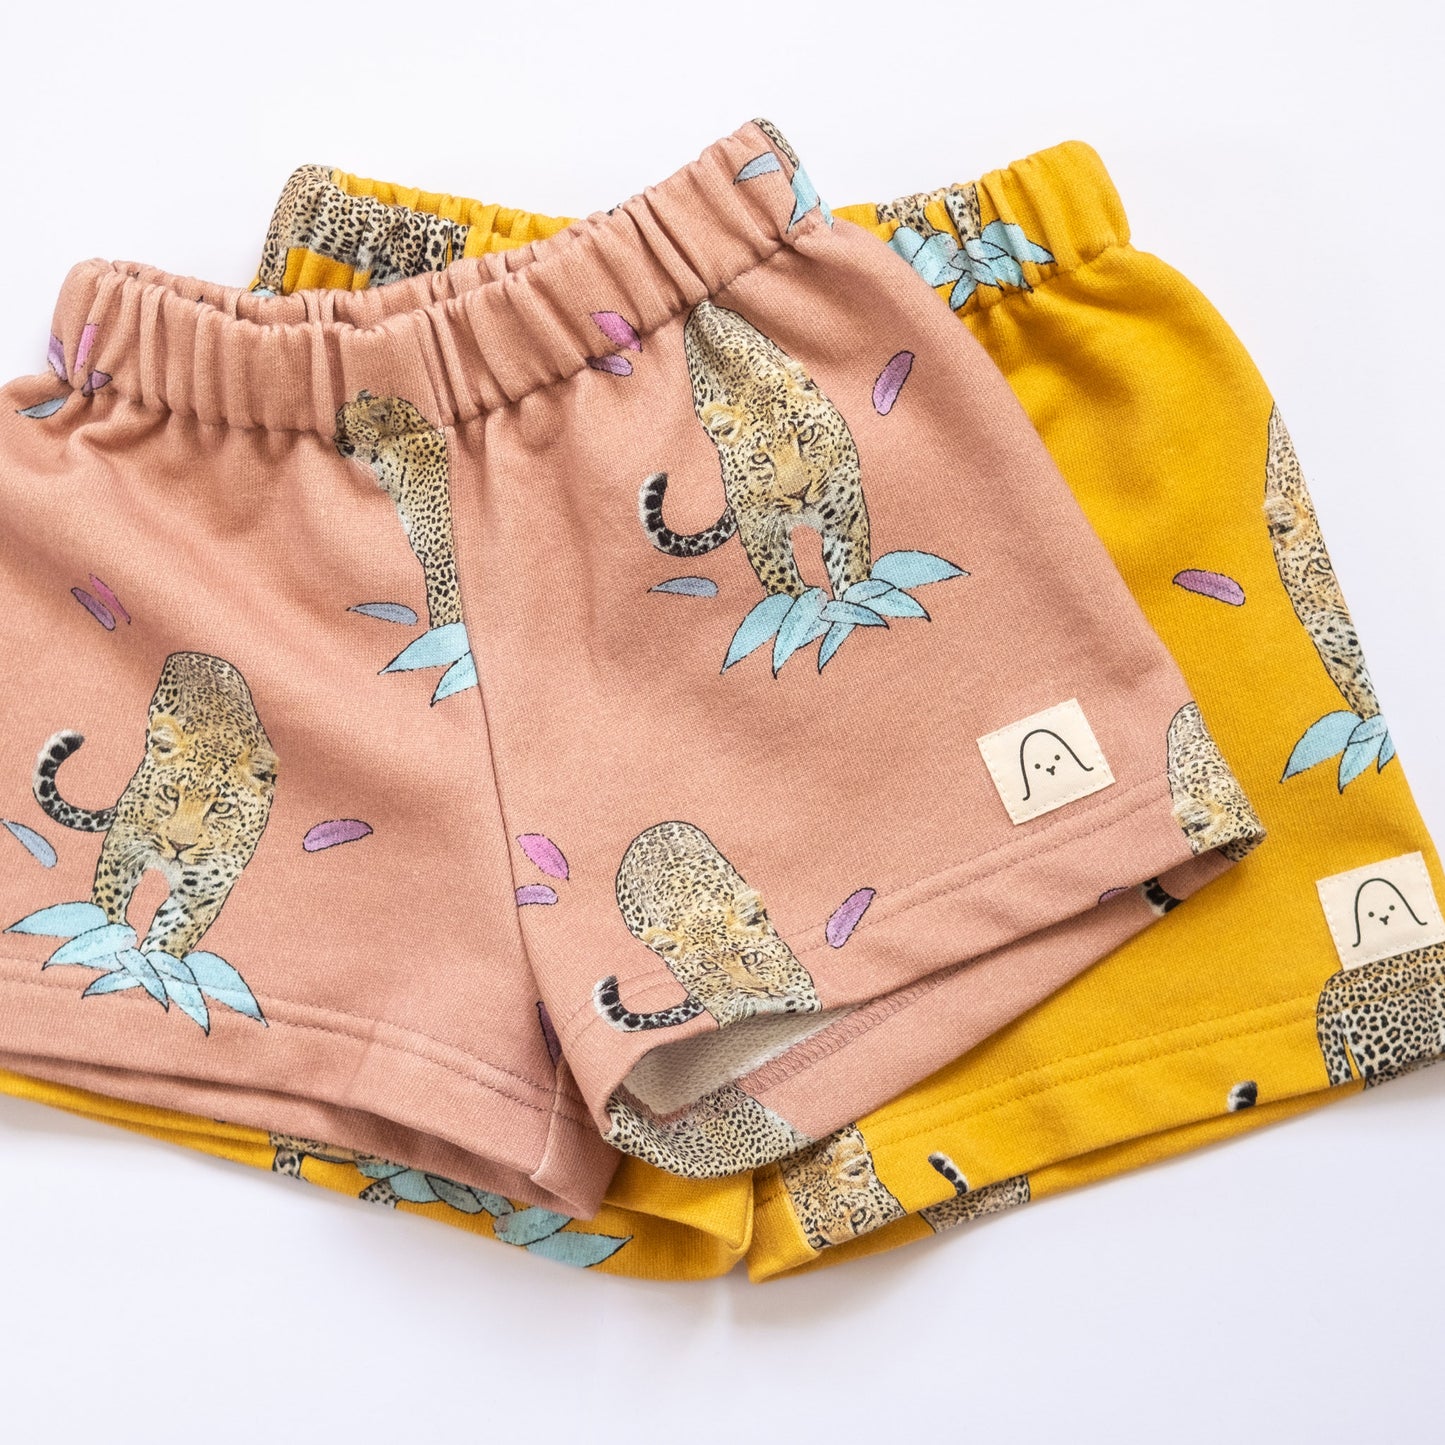 Rosa Leoparden-Shorts